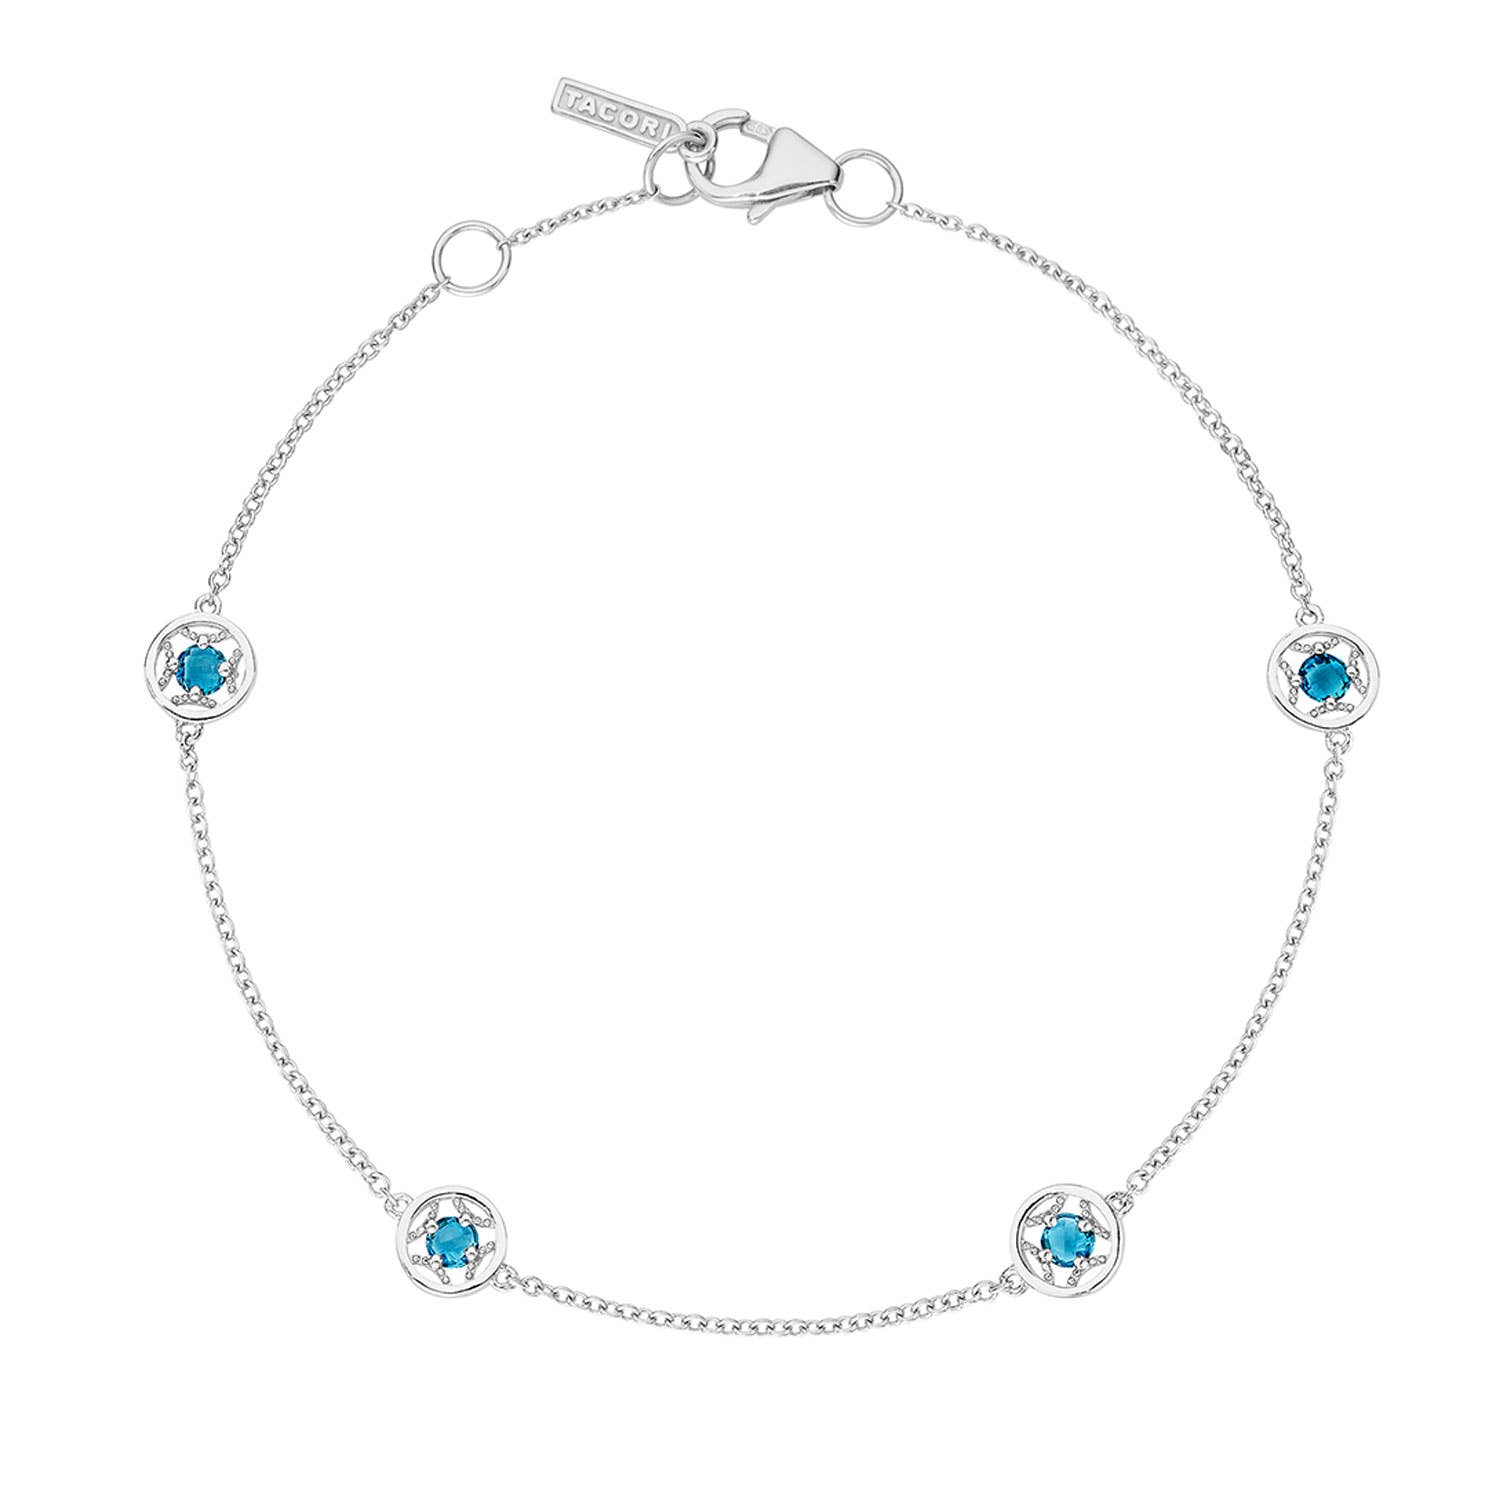 4-Station Petite Gemstone Bracelet with London Blue Topaz